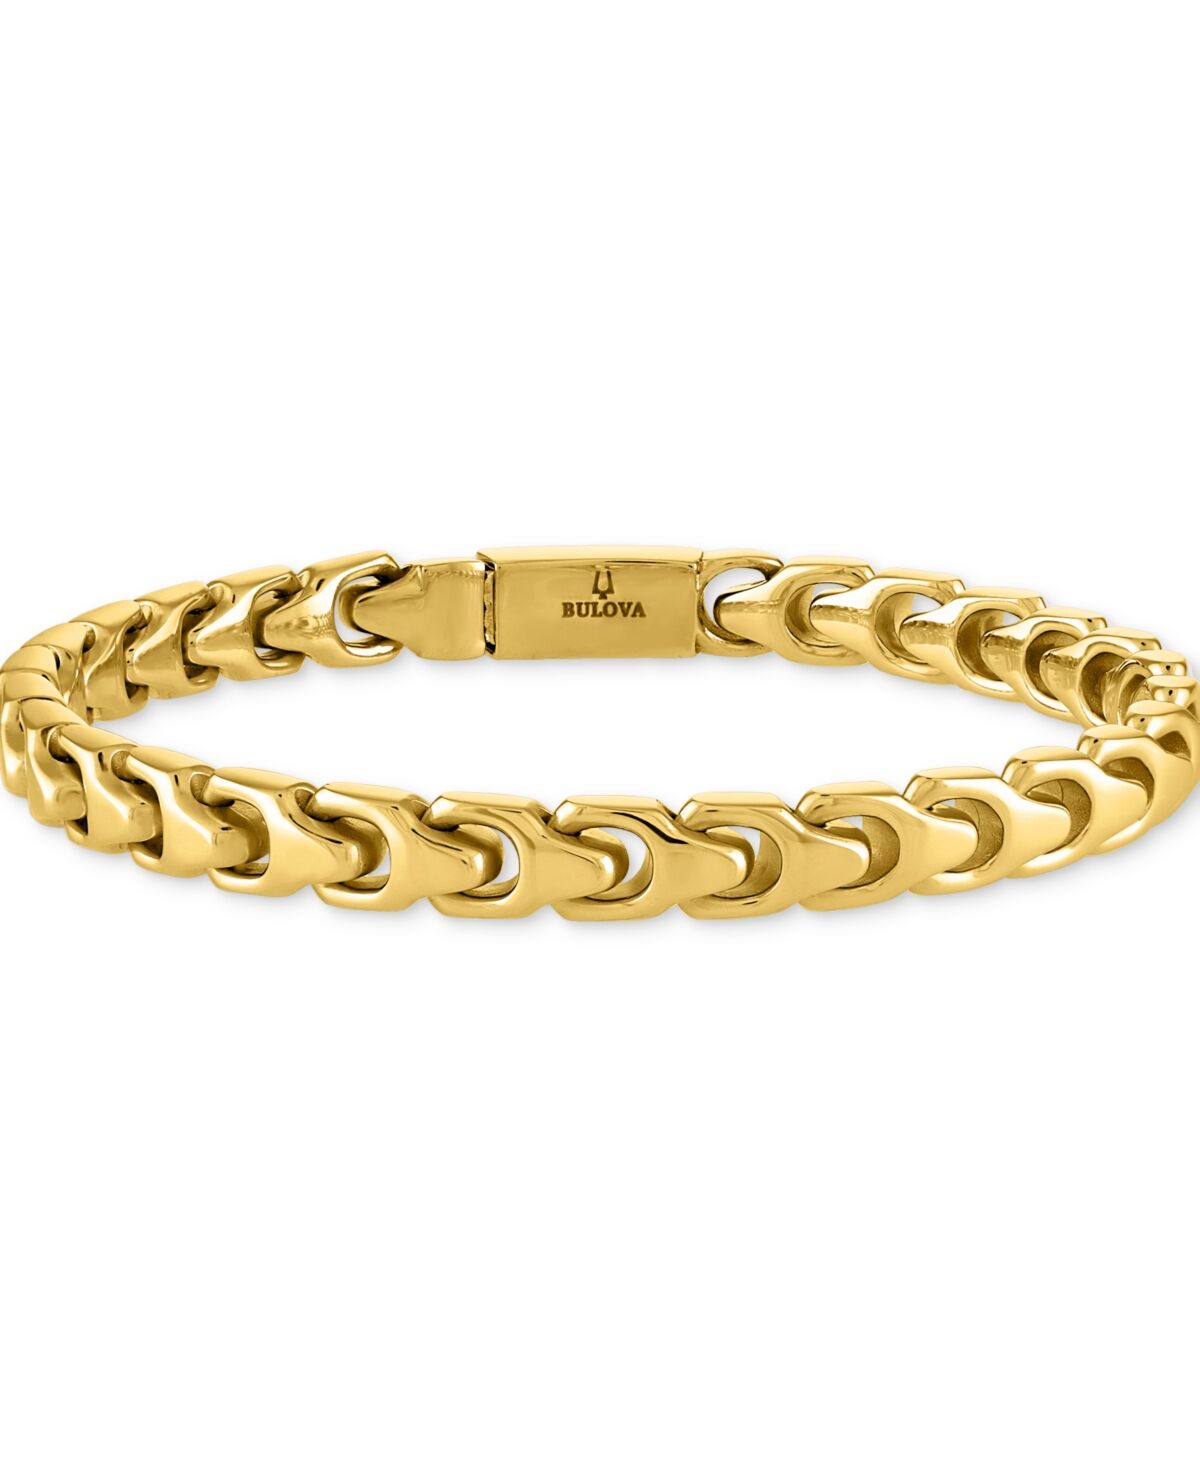 Bulova Men's Link Bracelet in Gold-Plated Stainless Steel - Na